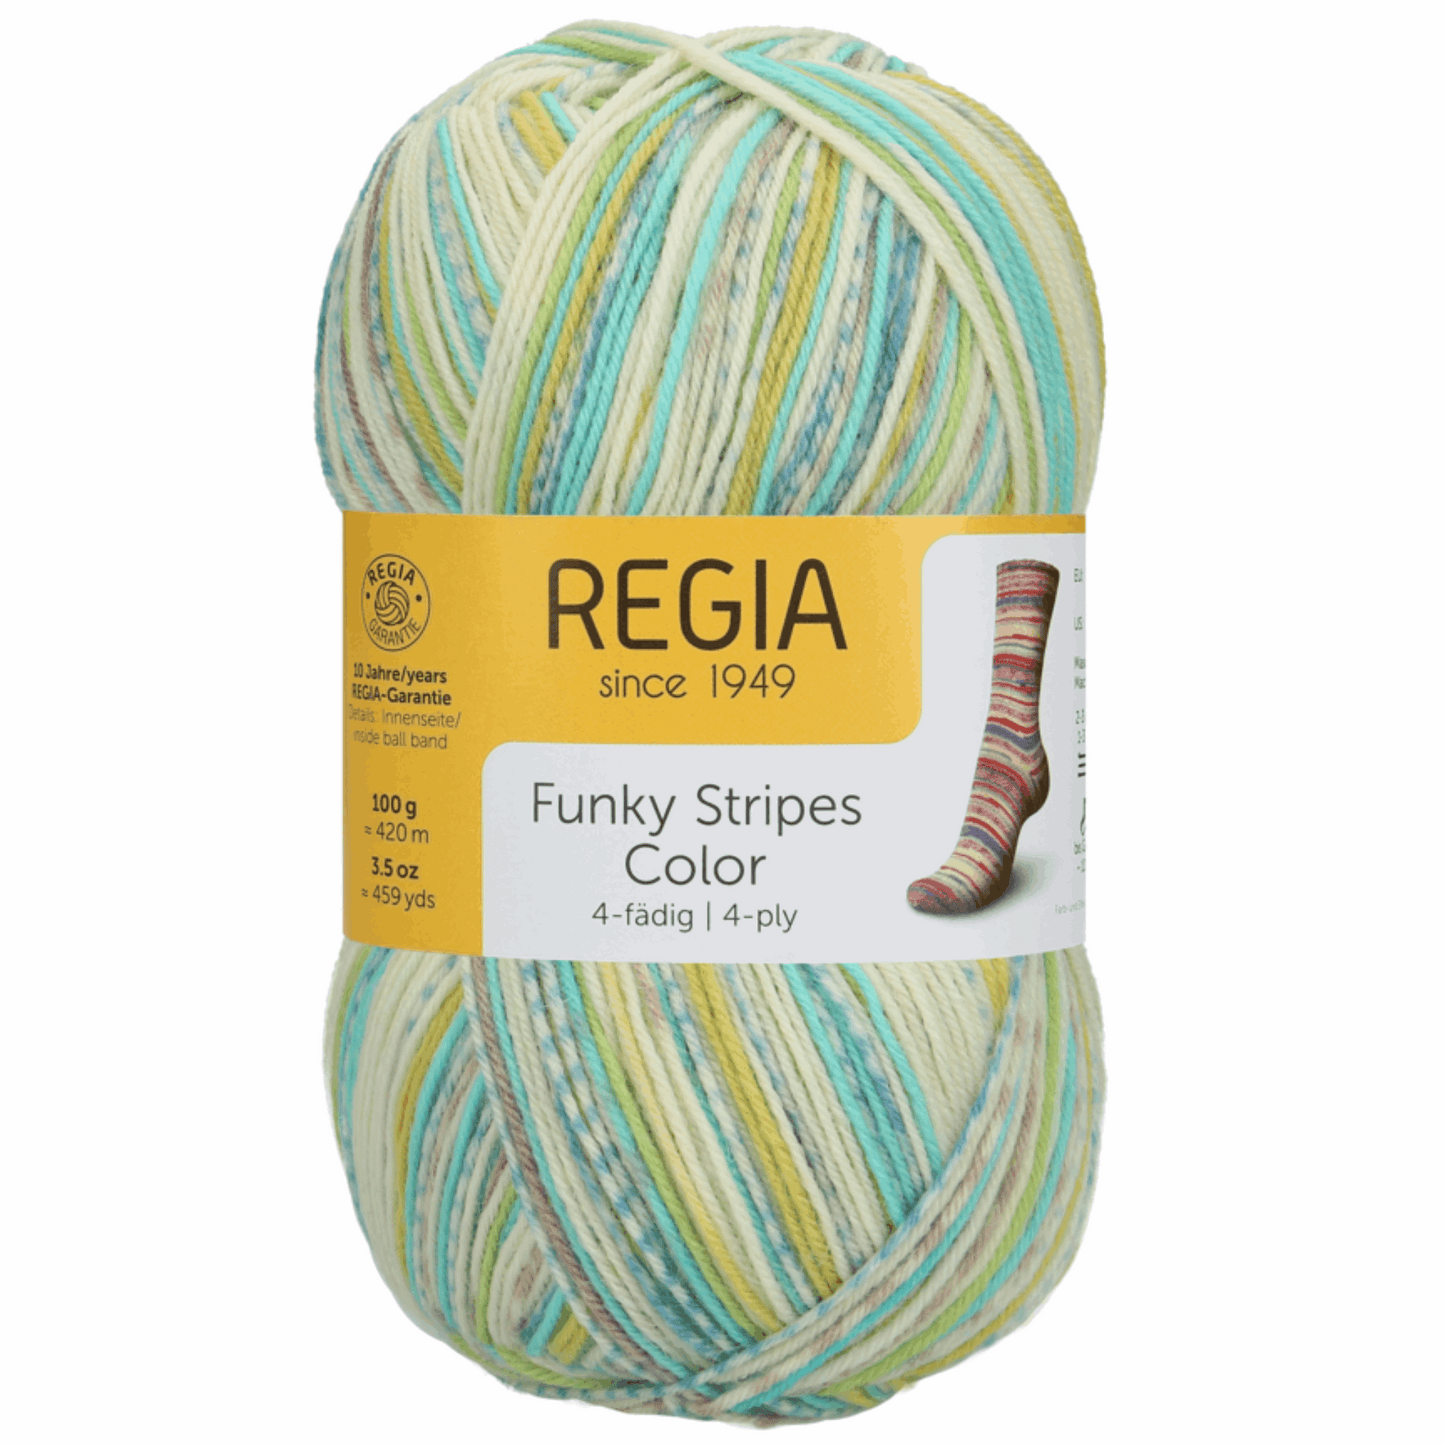 Regia 4-thread color 50g, 90102, color funky turquo 3795